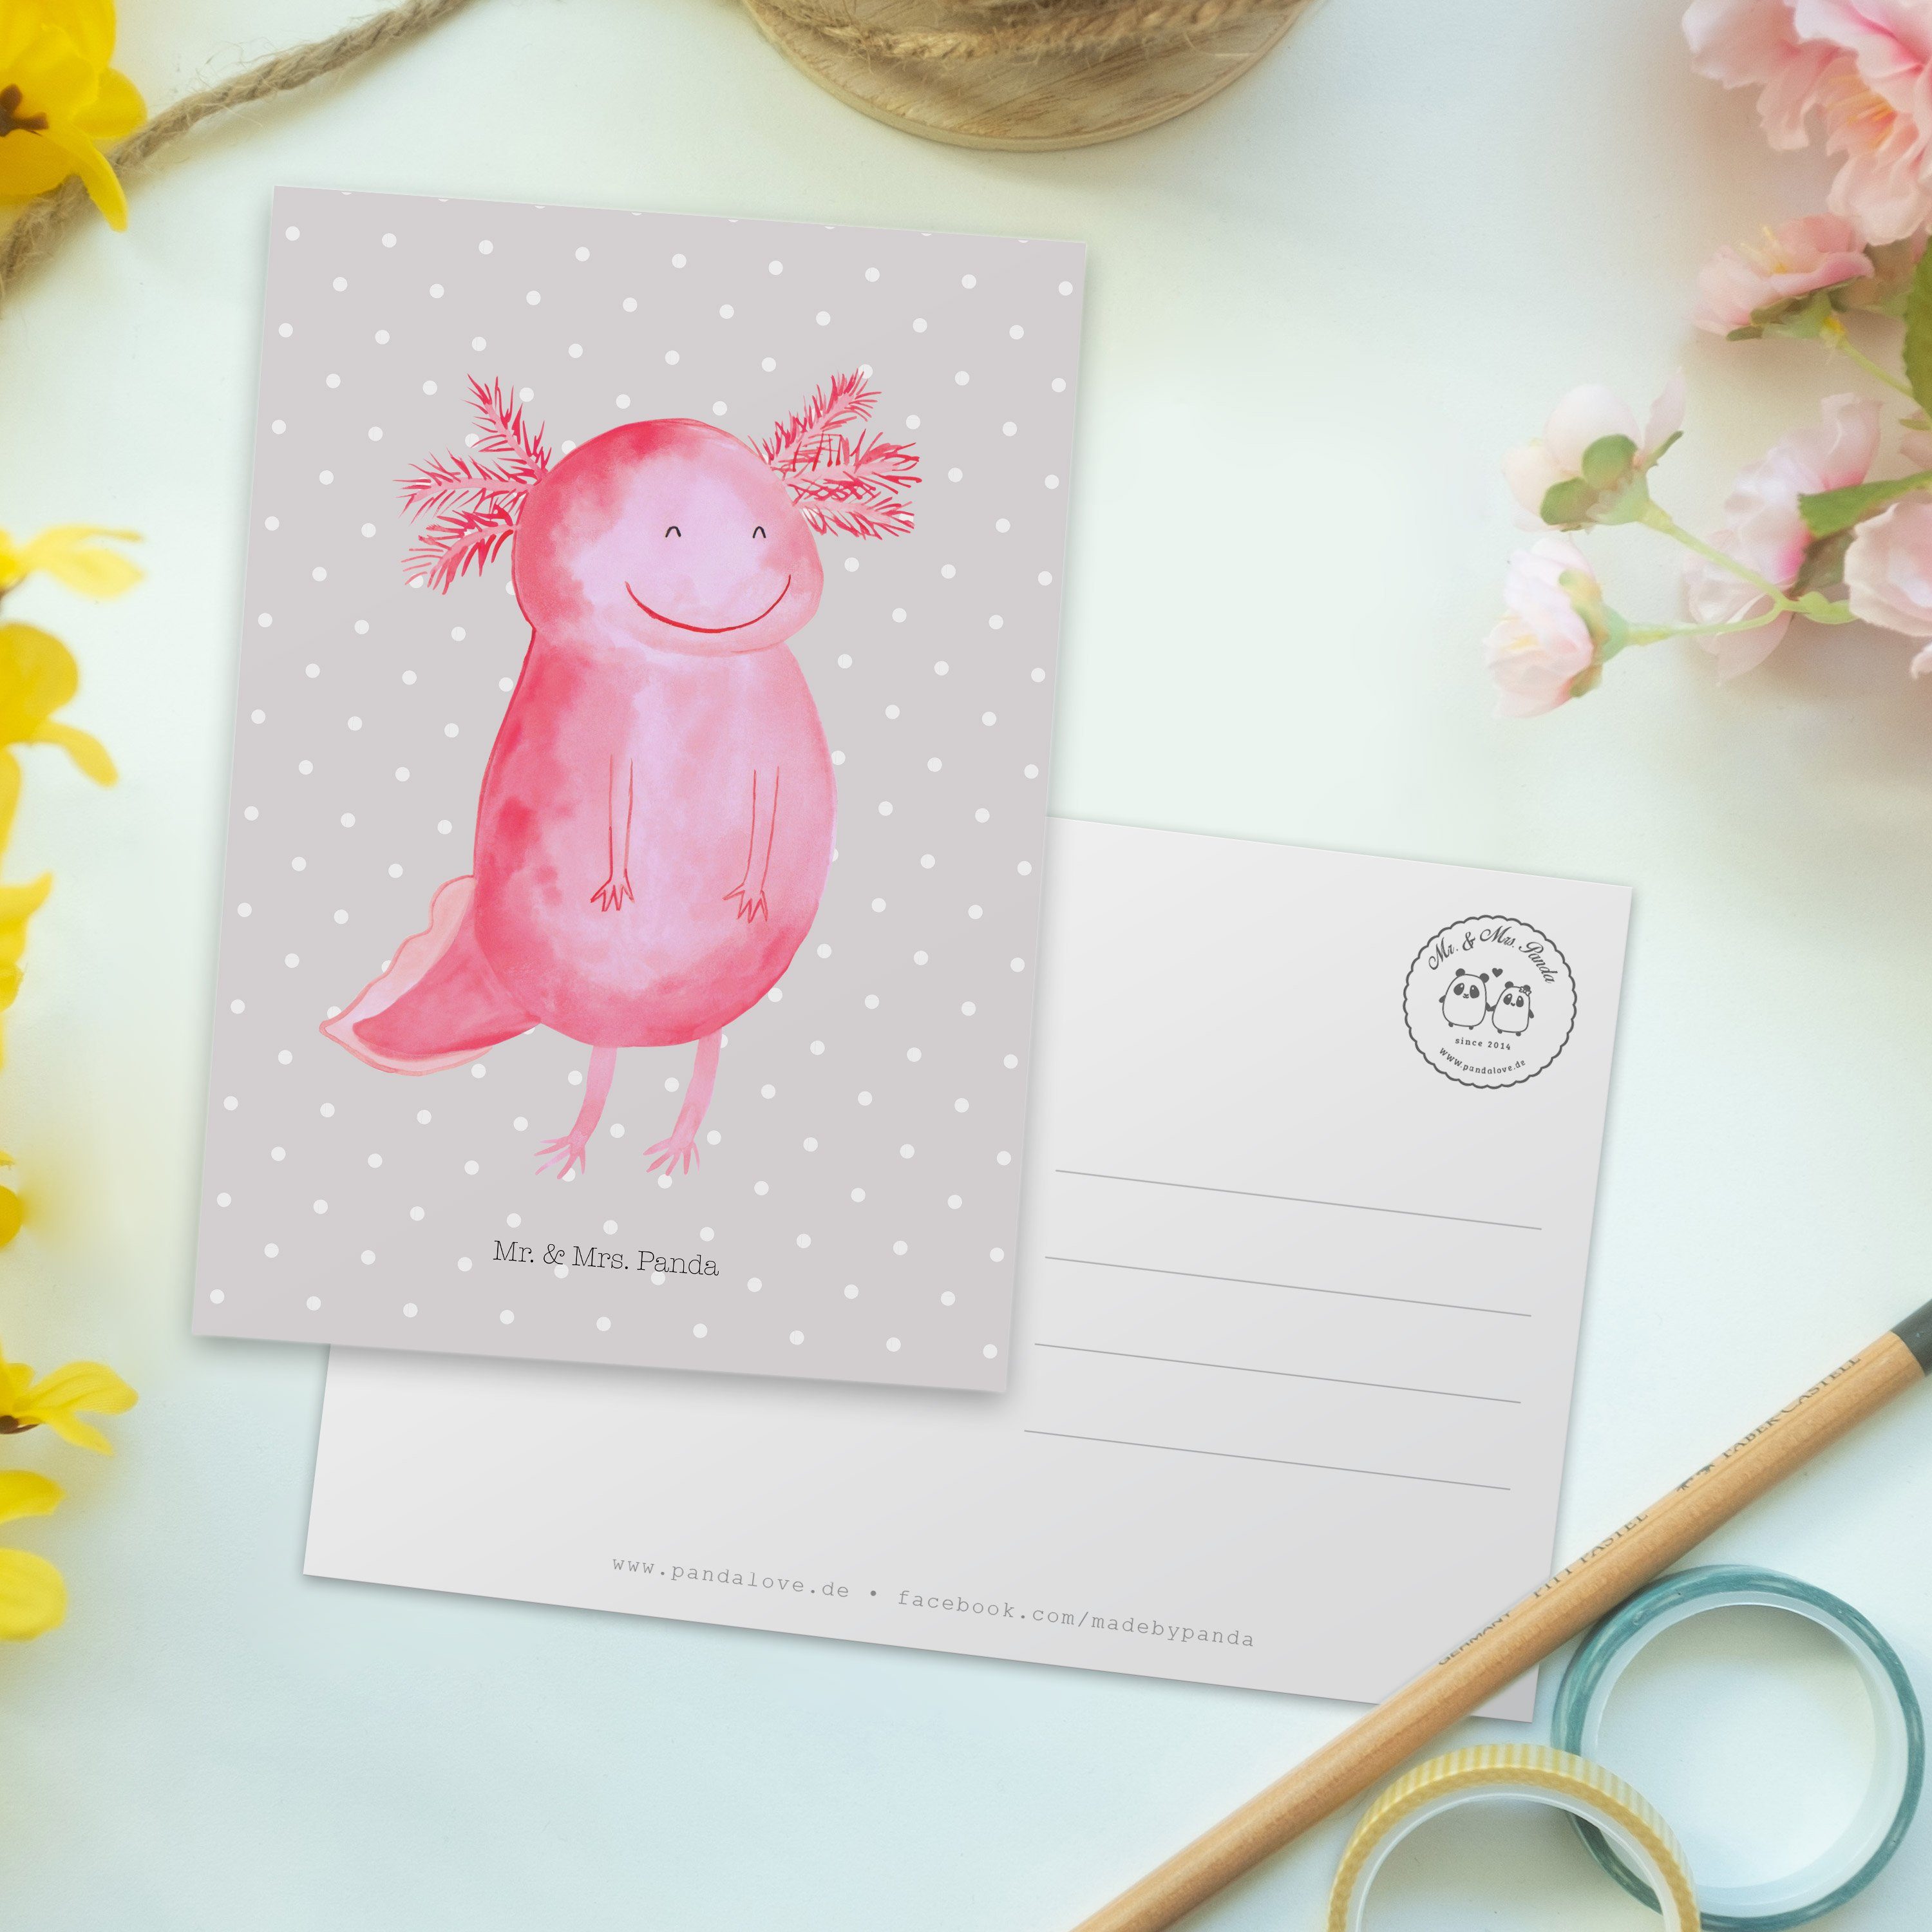 Axolotl - Schwanzlurc Postkarte gelaunt, Geschenk, & Mr. Pastell gut Mrs. Panda glücklich Grau -